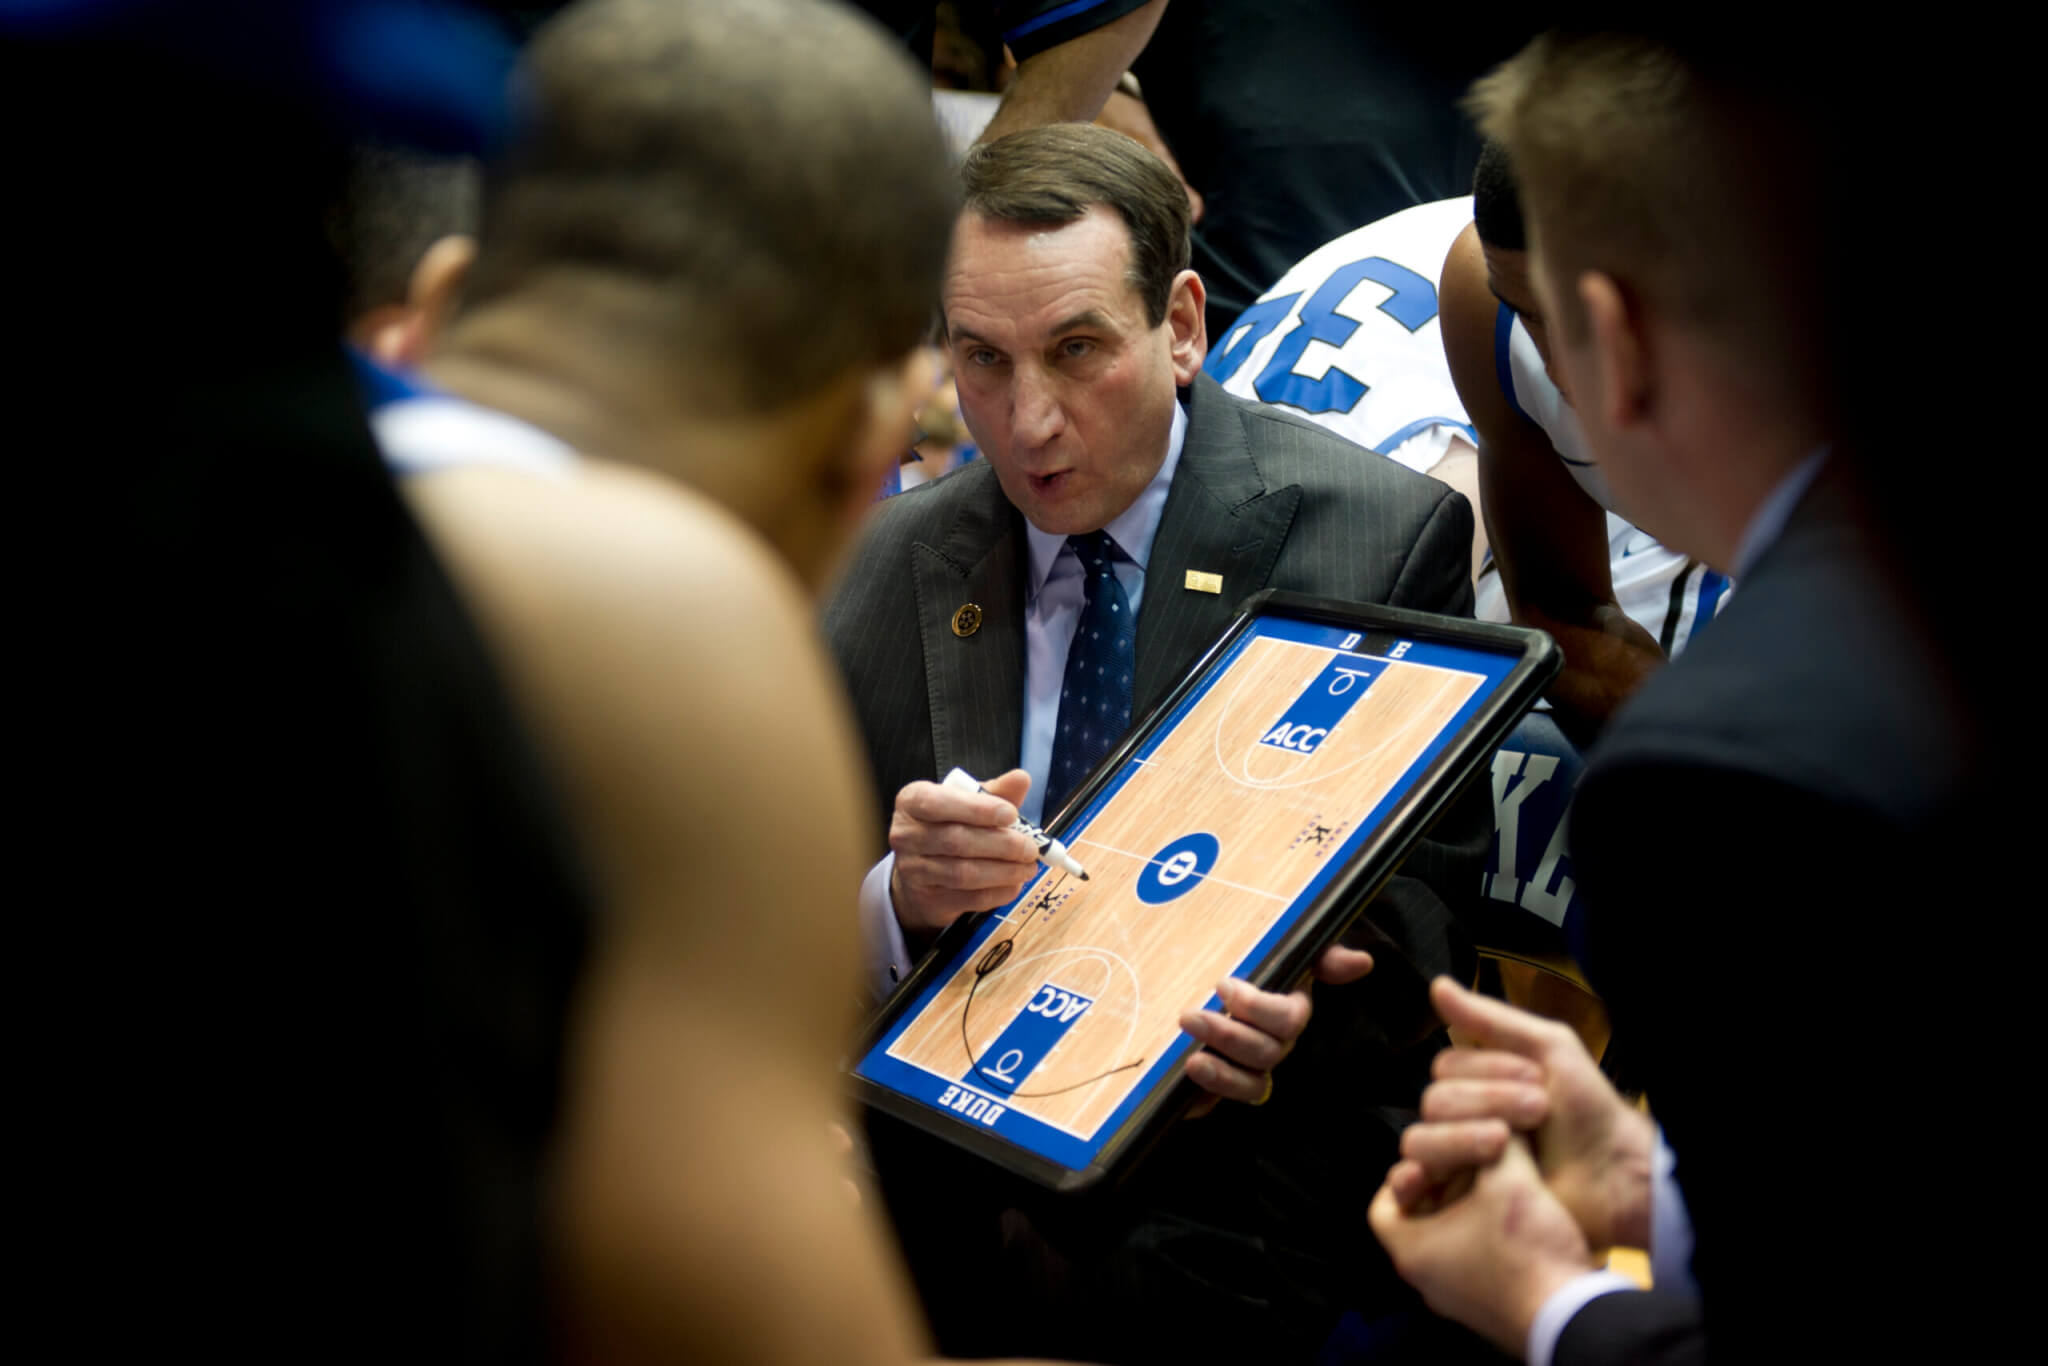 Duke University head coach Mike Krzyzewski talks to his team